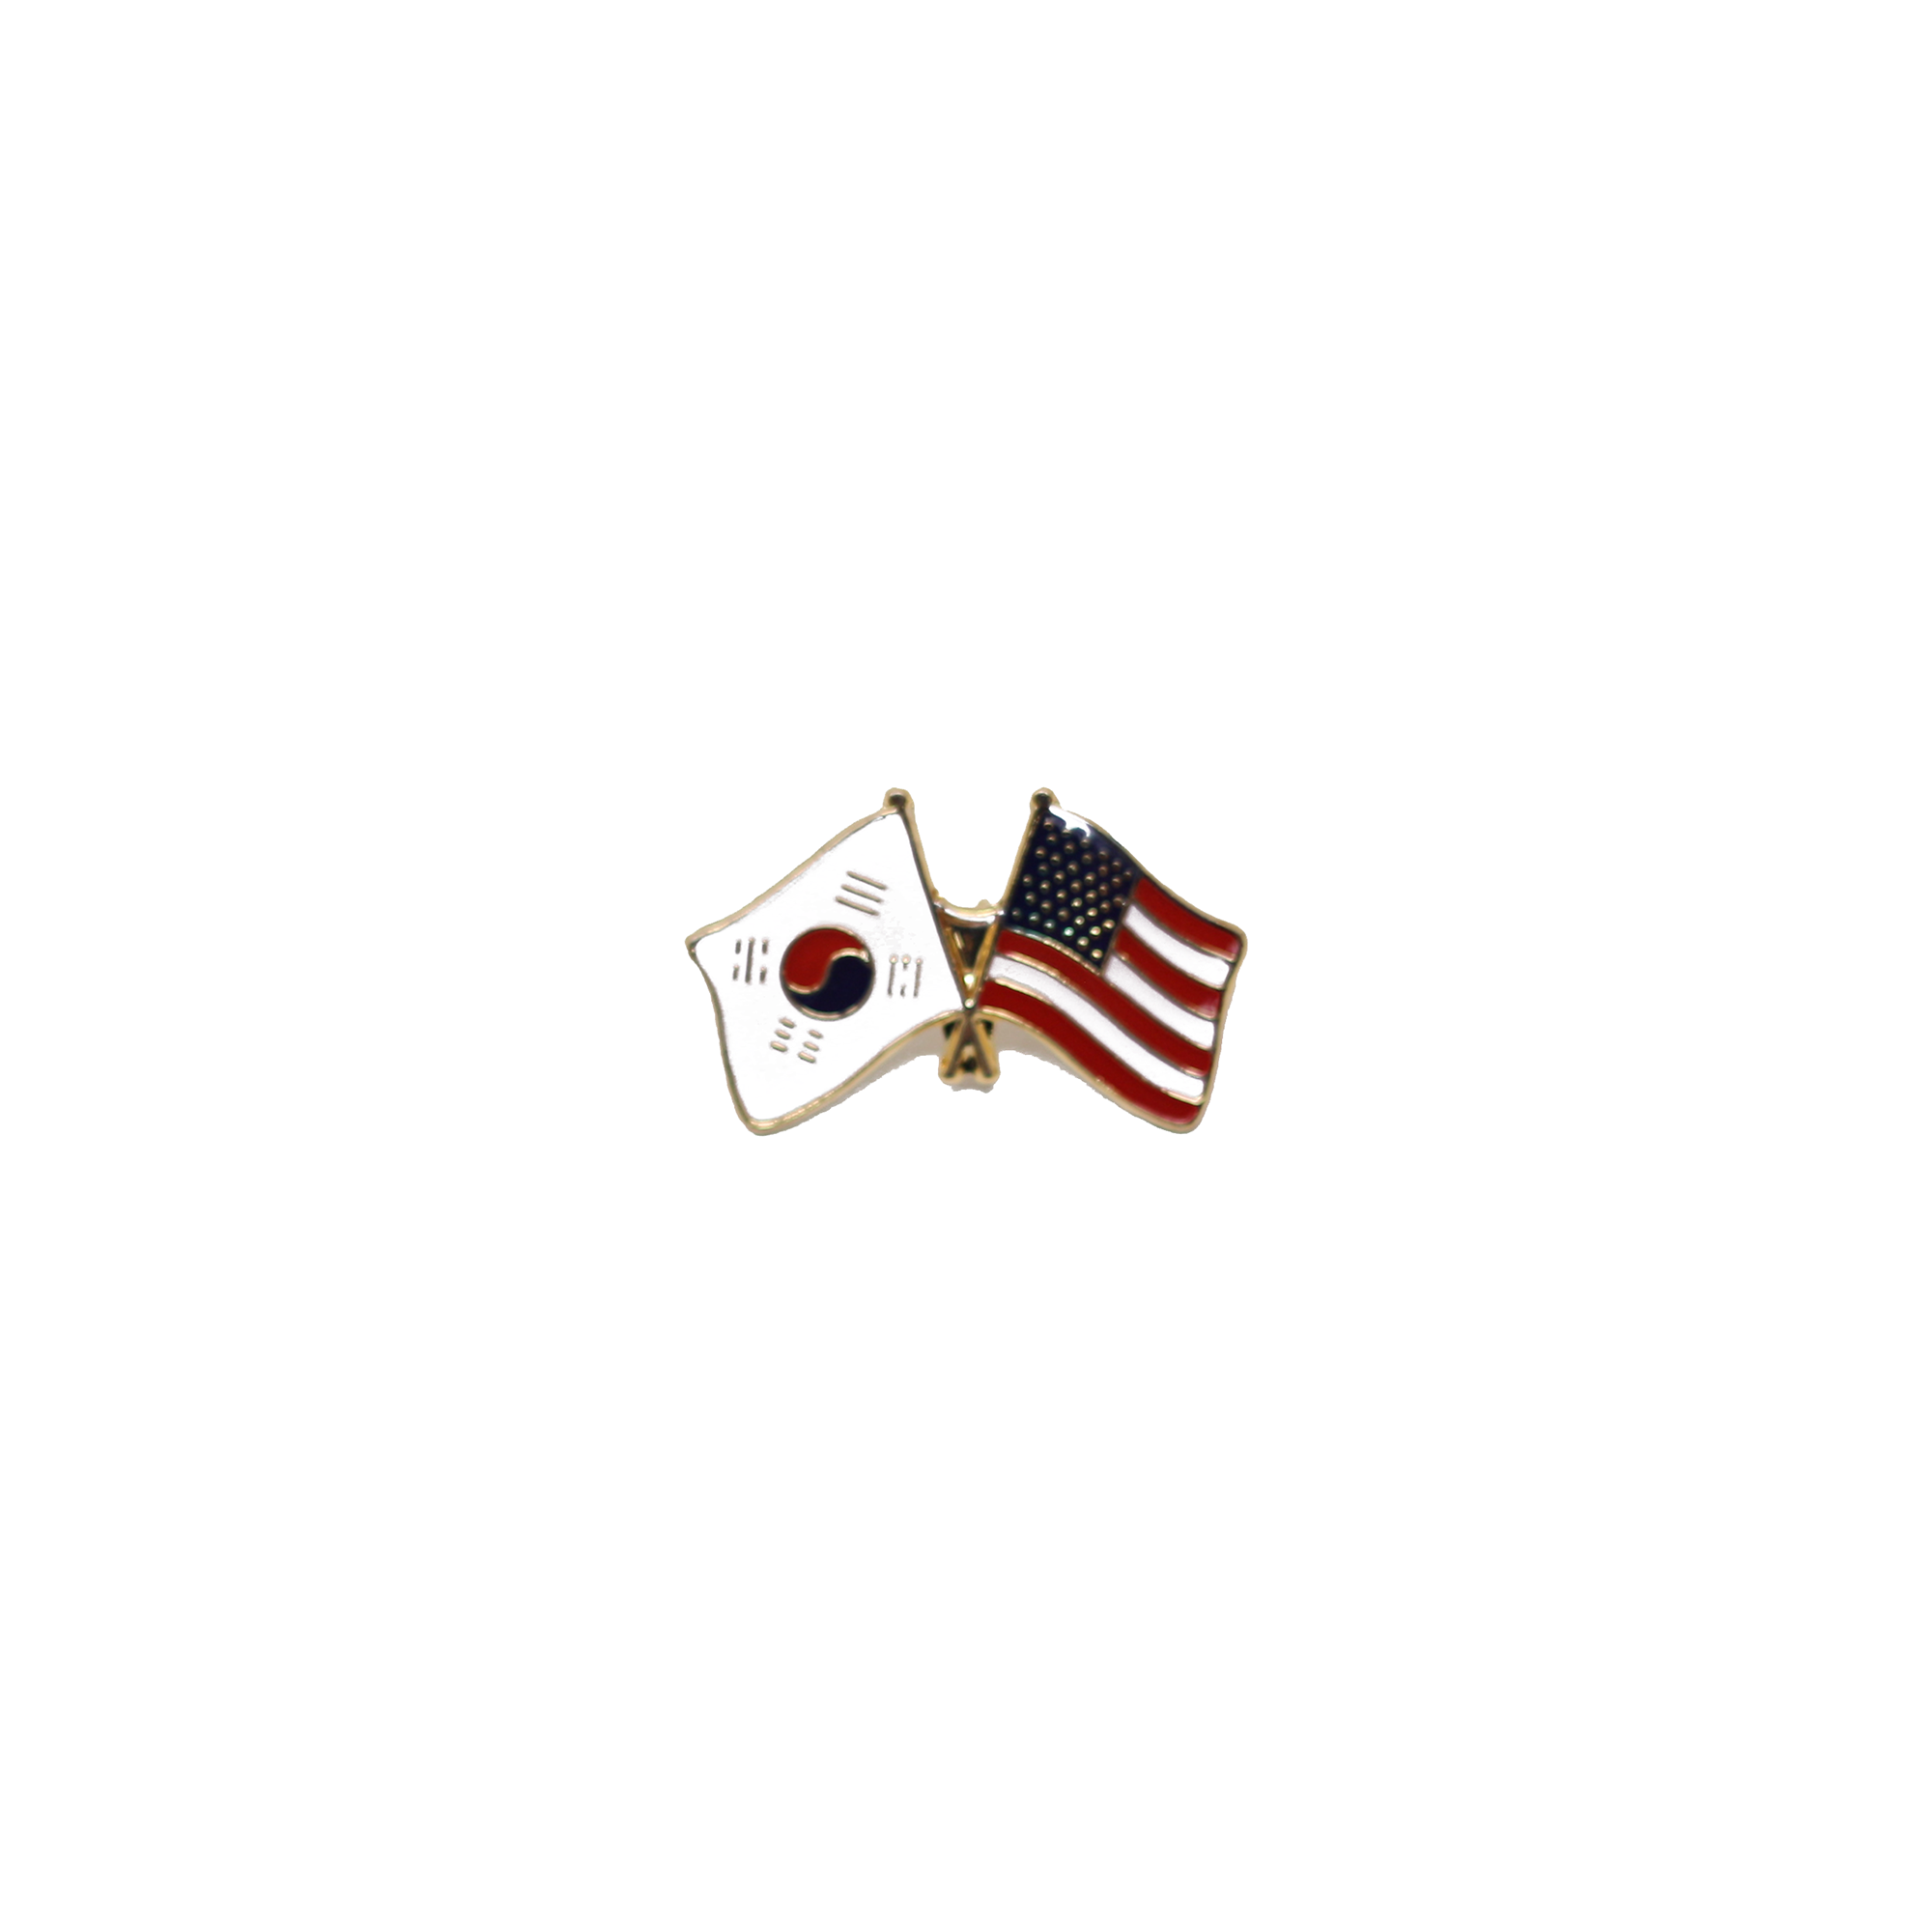 USA Flag Patch - Best Martial Arts / MOOTO USA